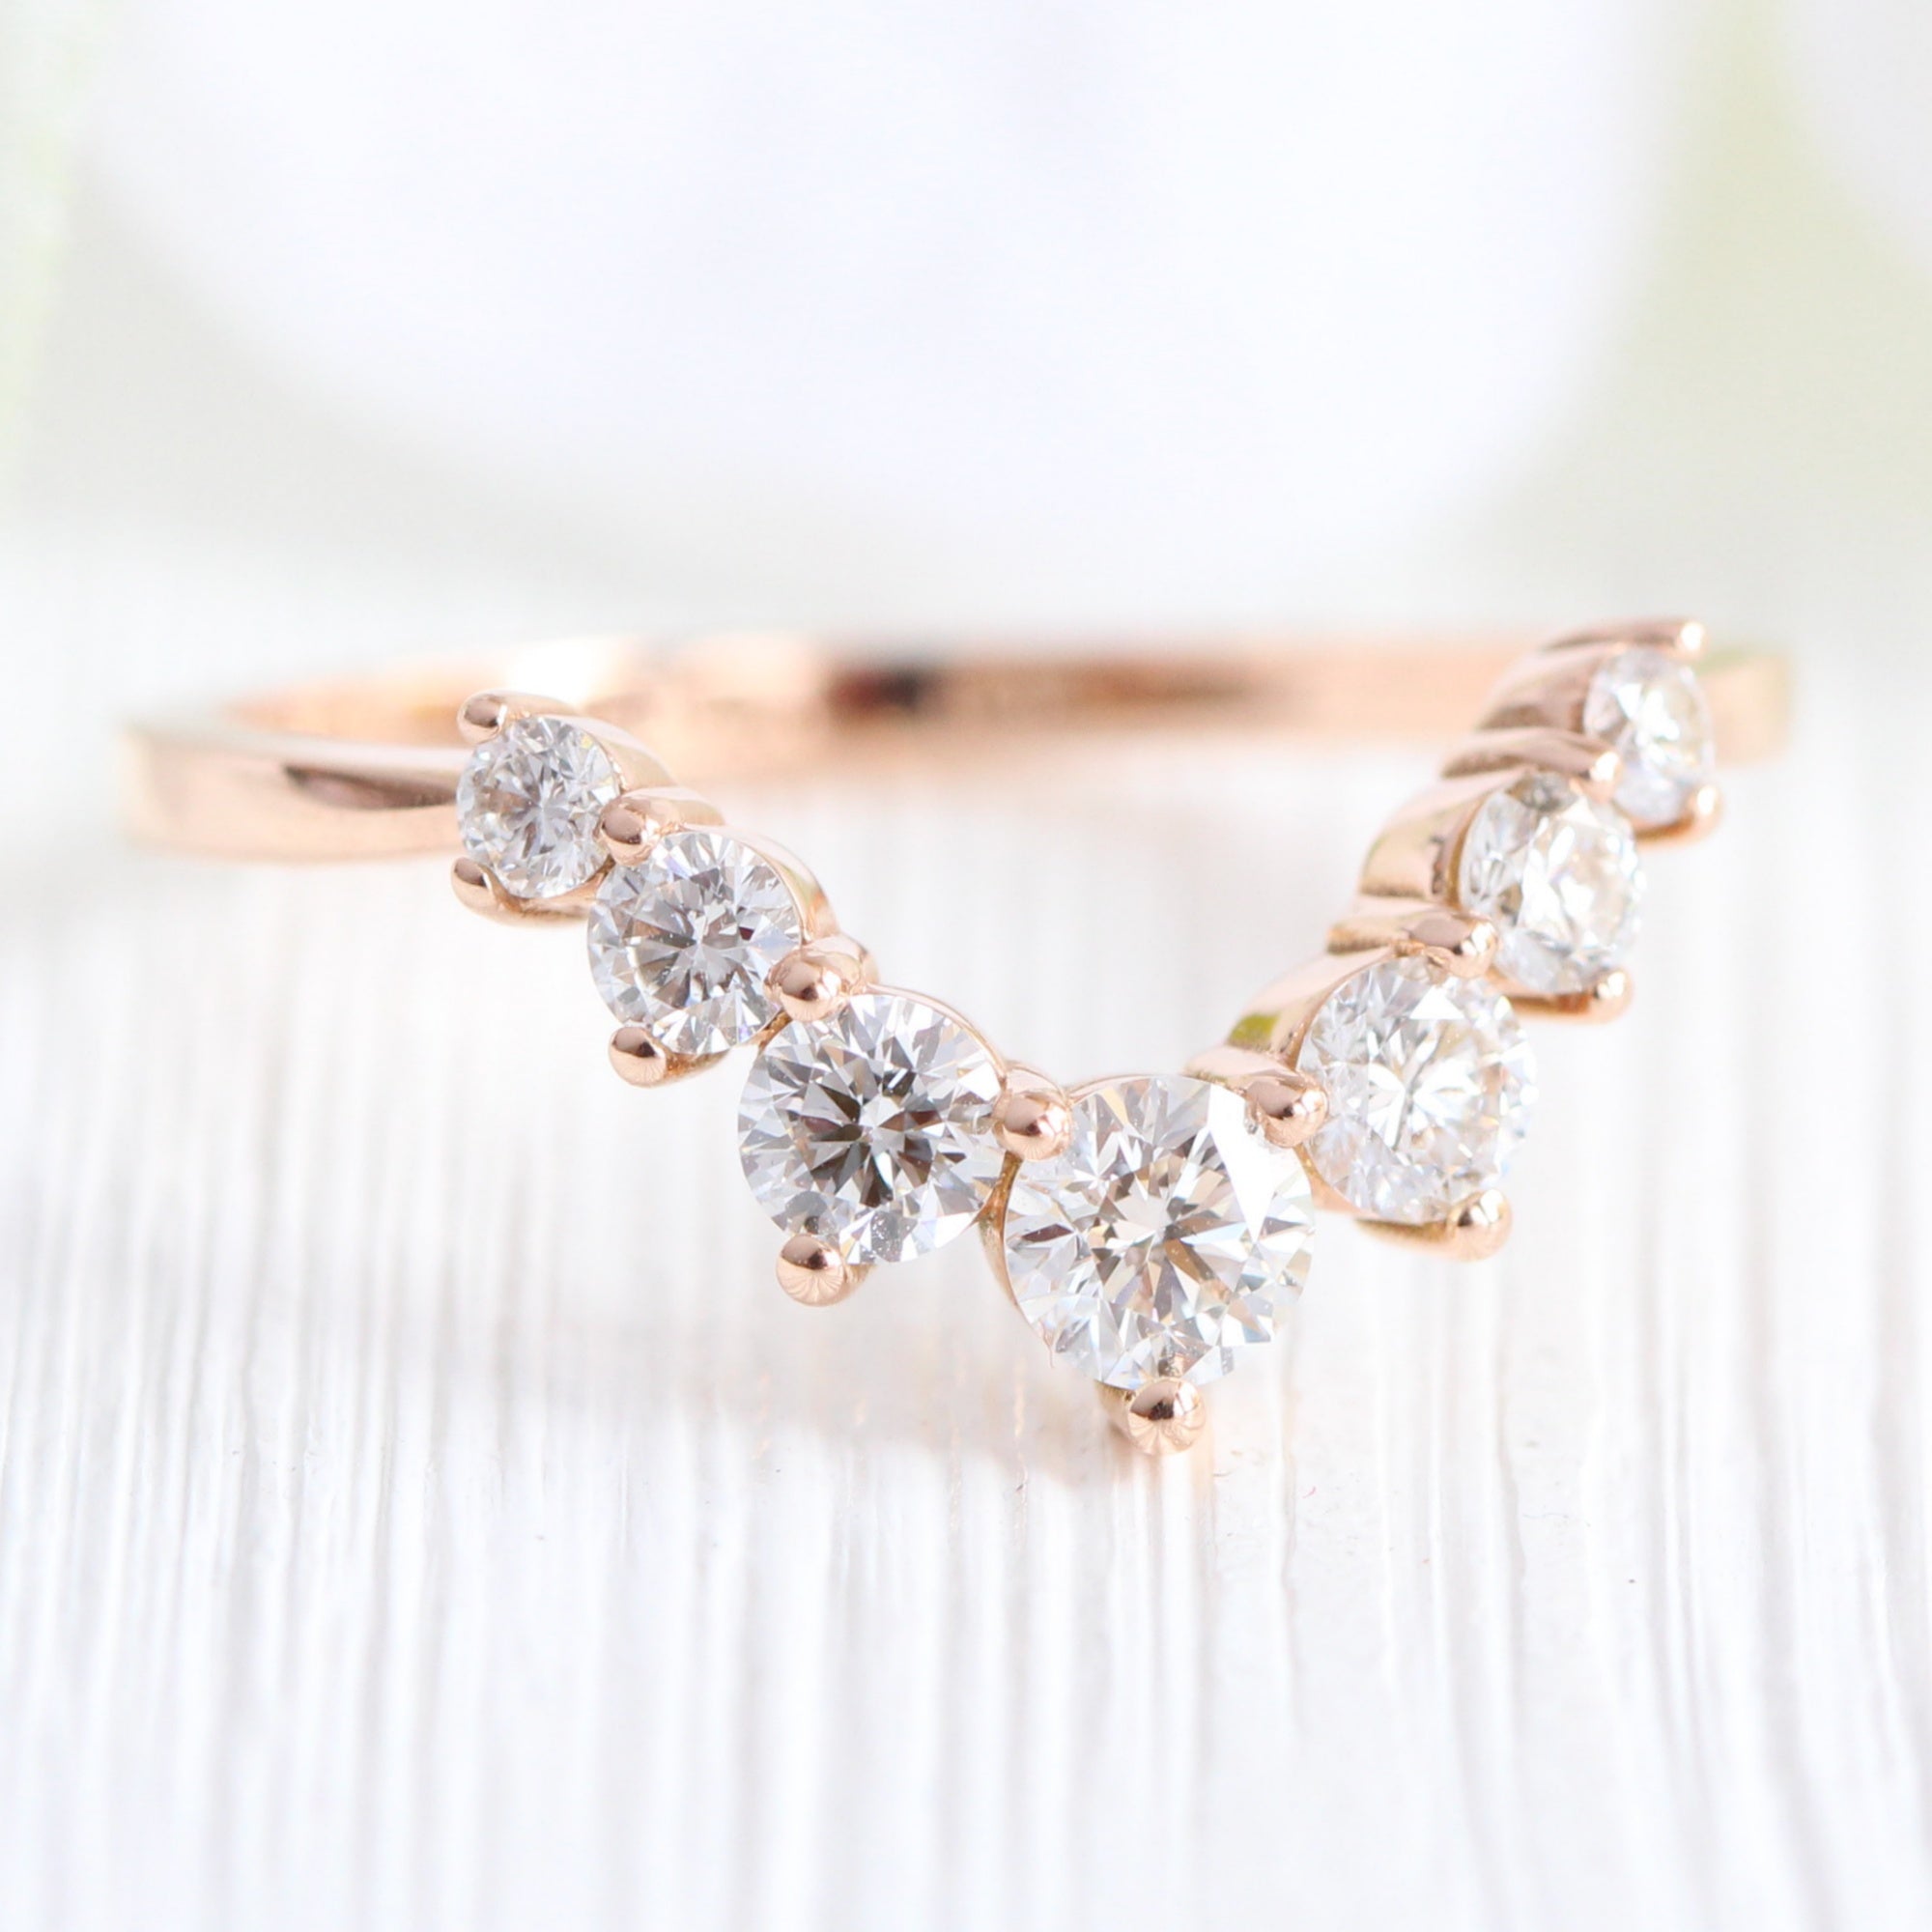 Large 7 diamond wedding ring rose gold u shaped curved wedding band la more design jewelry